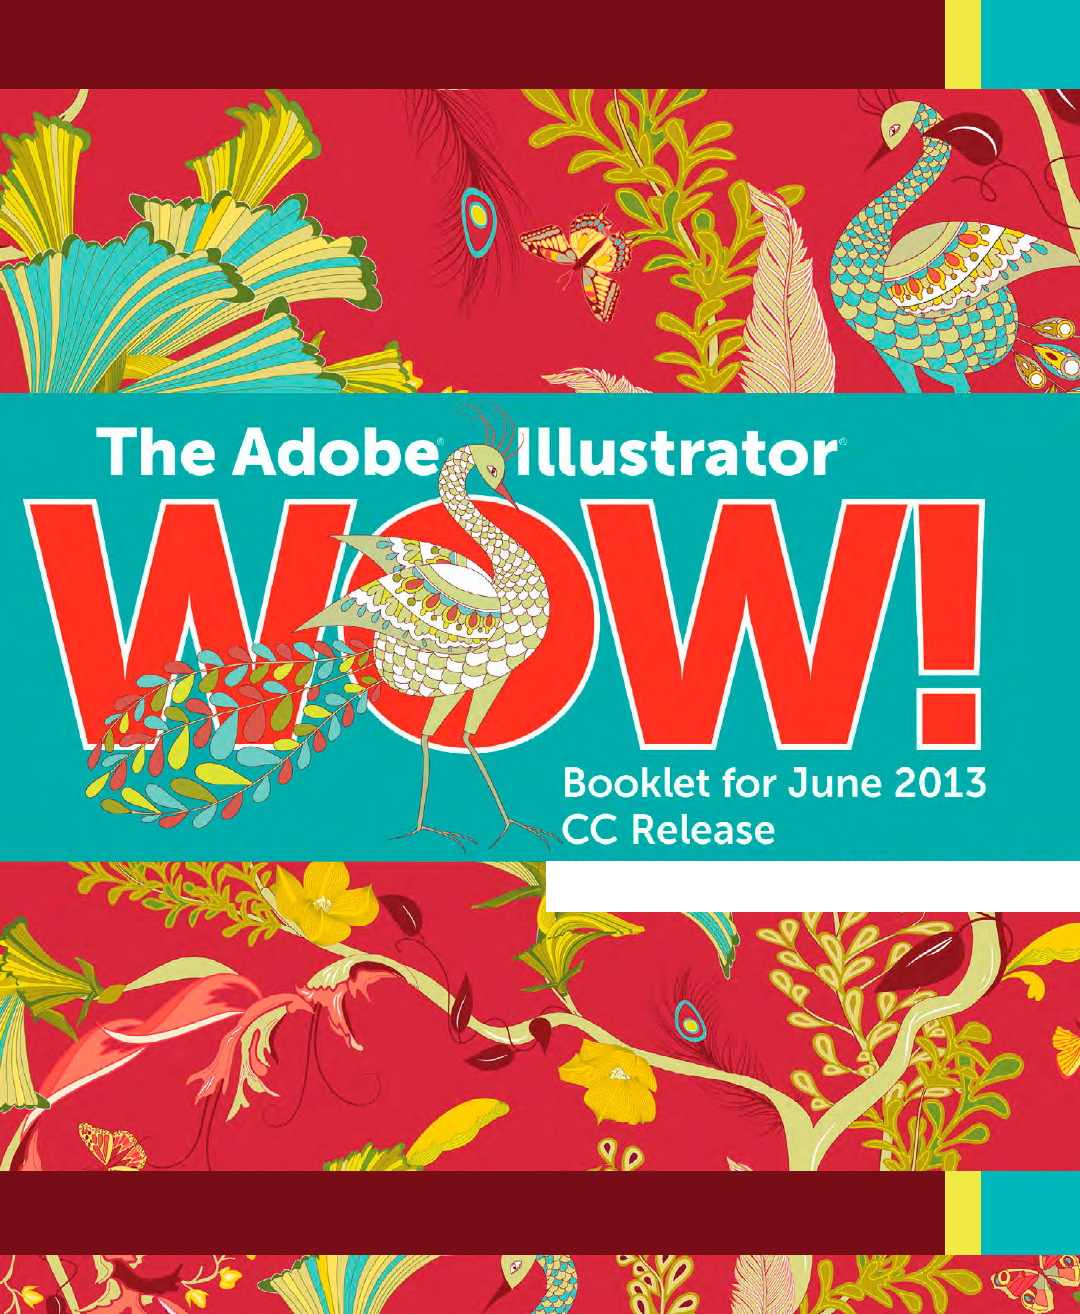 the adobe illustrator cs5 wow book free download